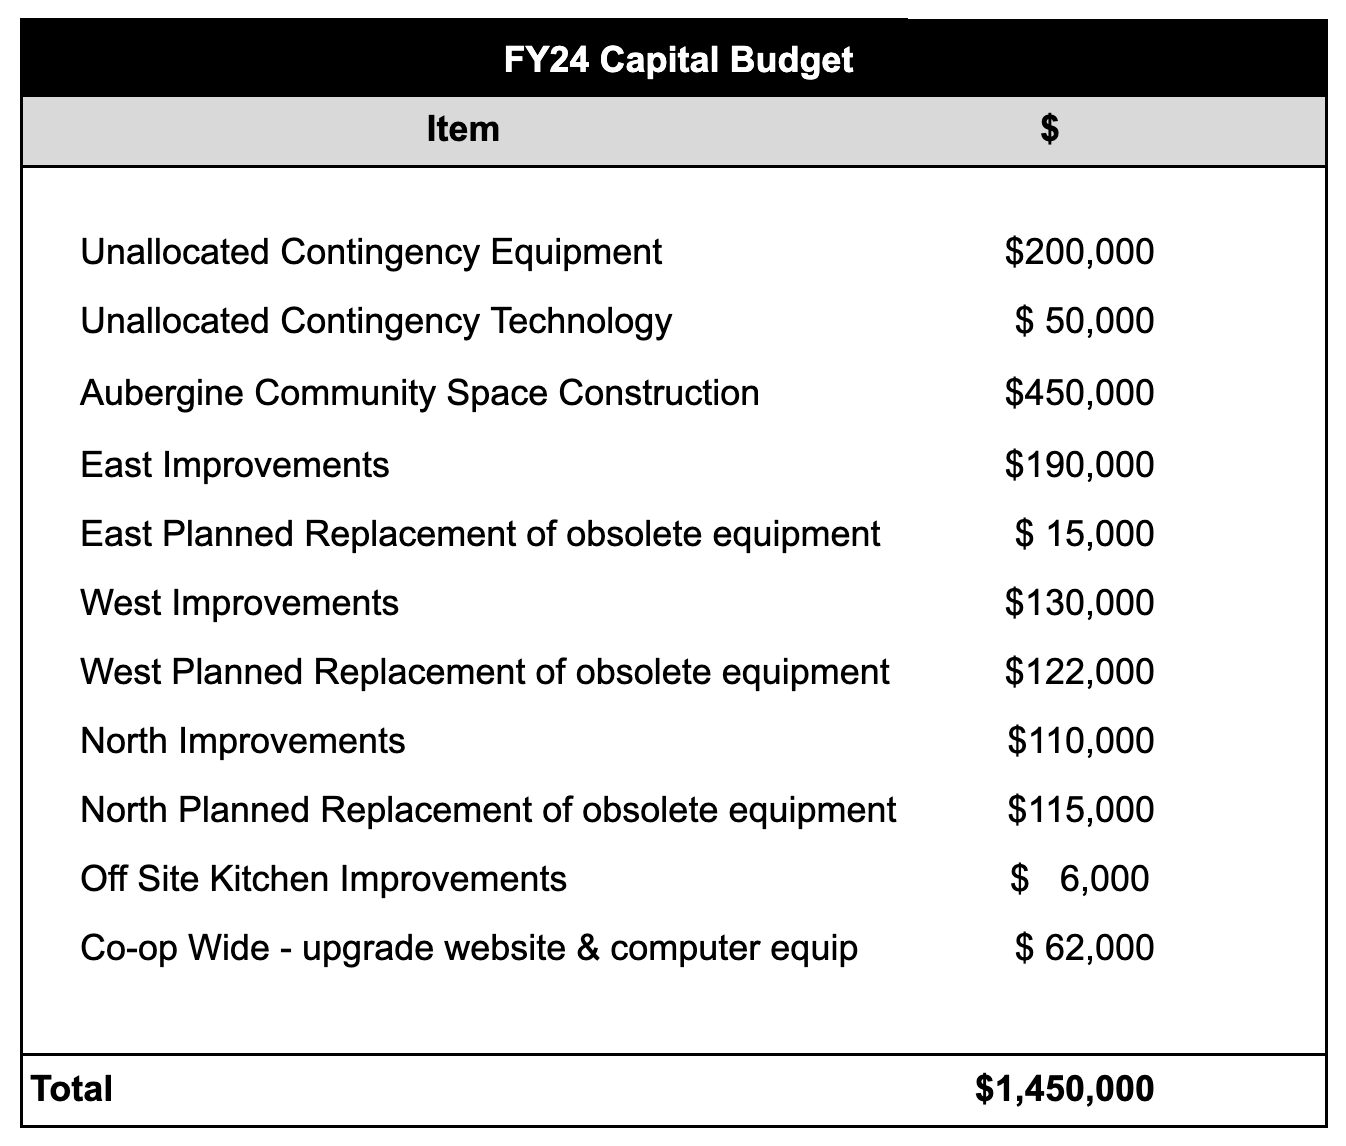 FY24 Capital Budget